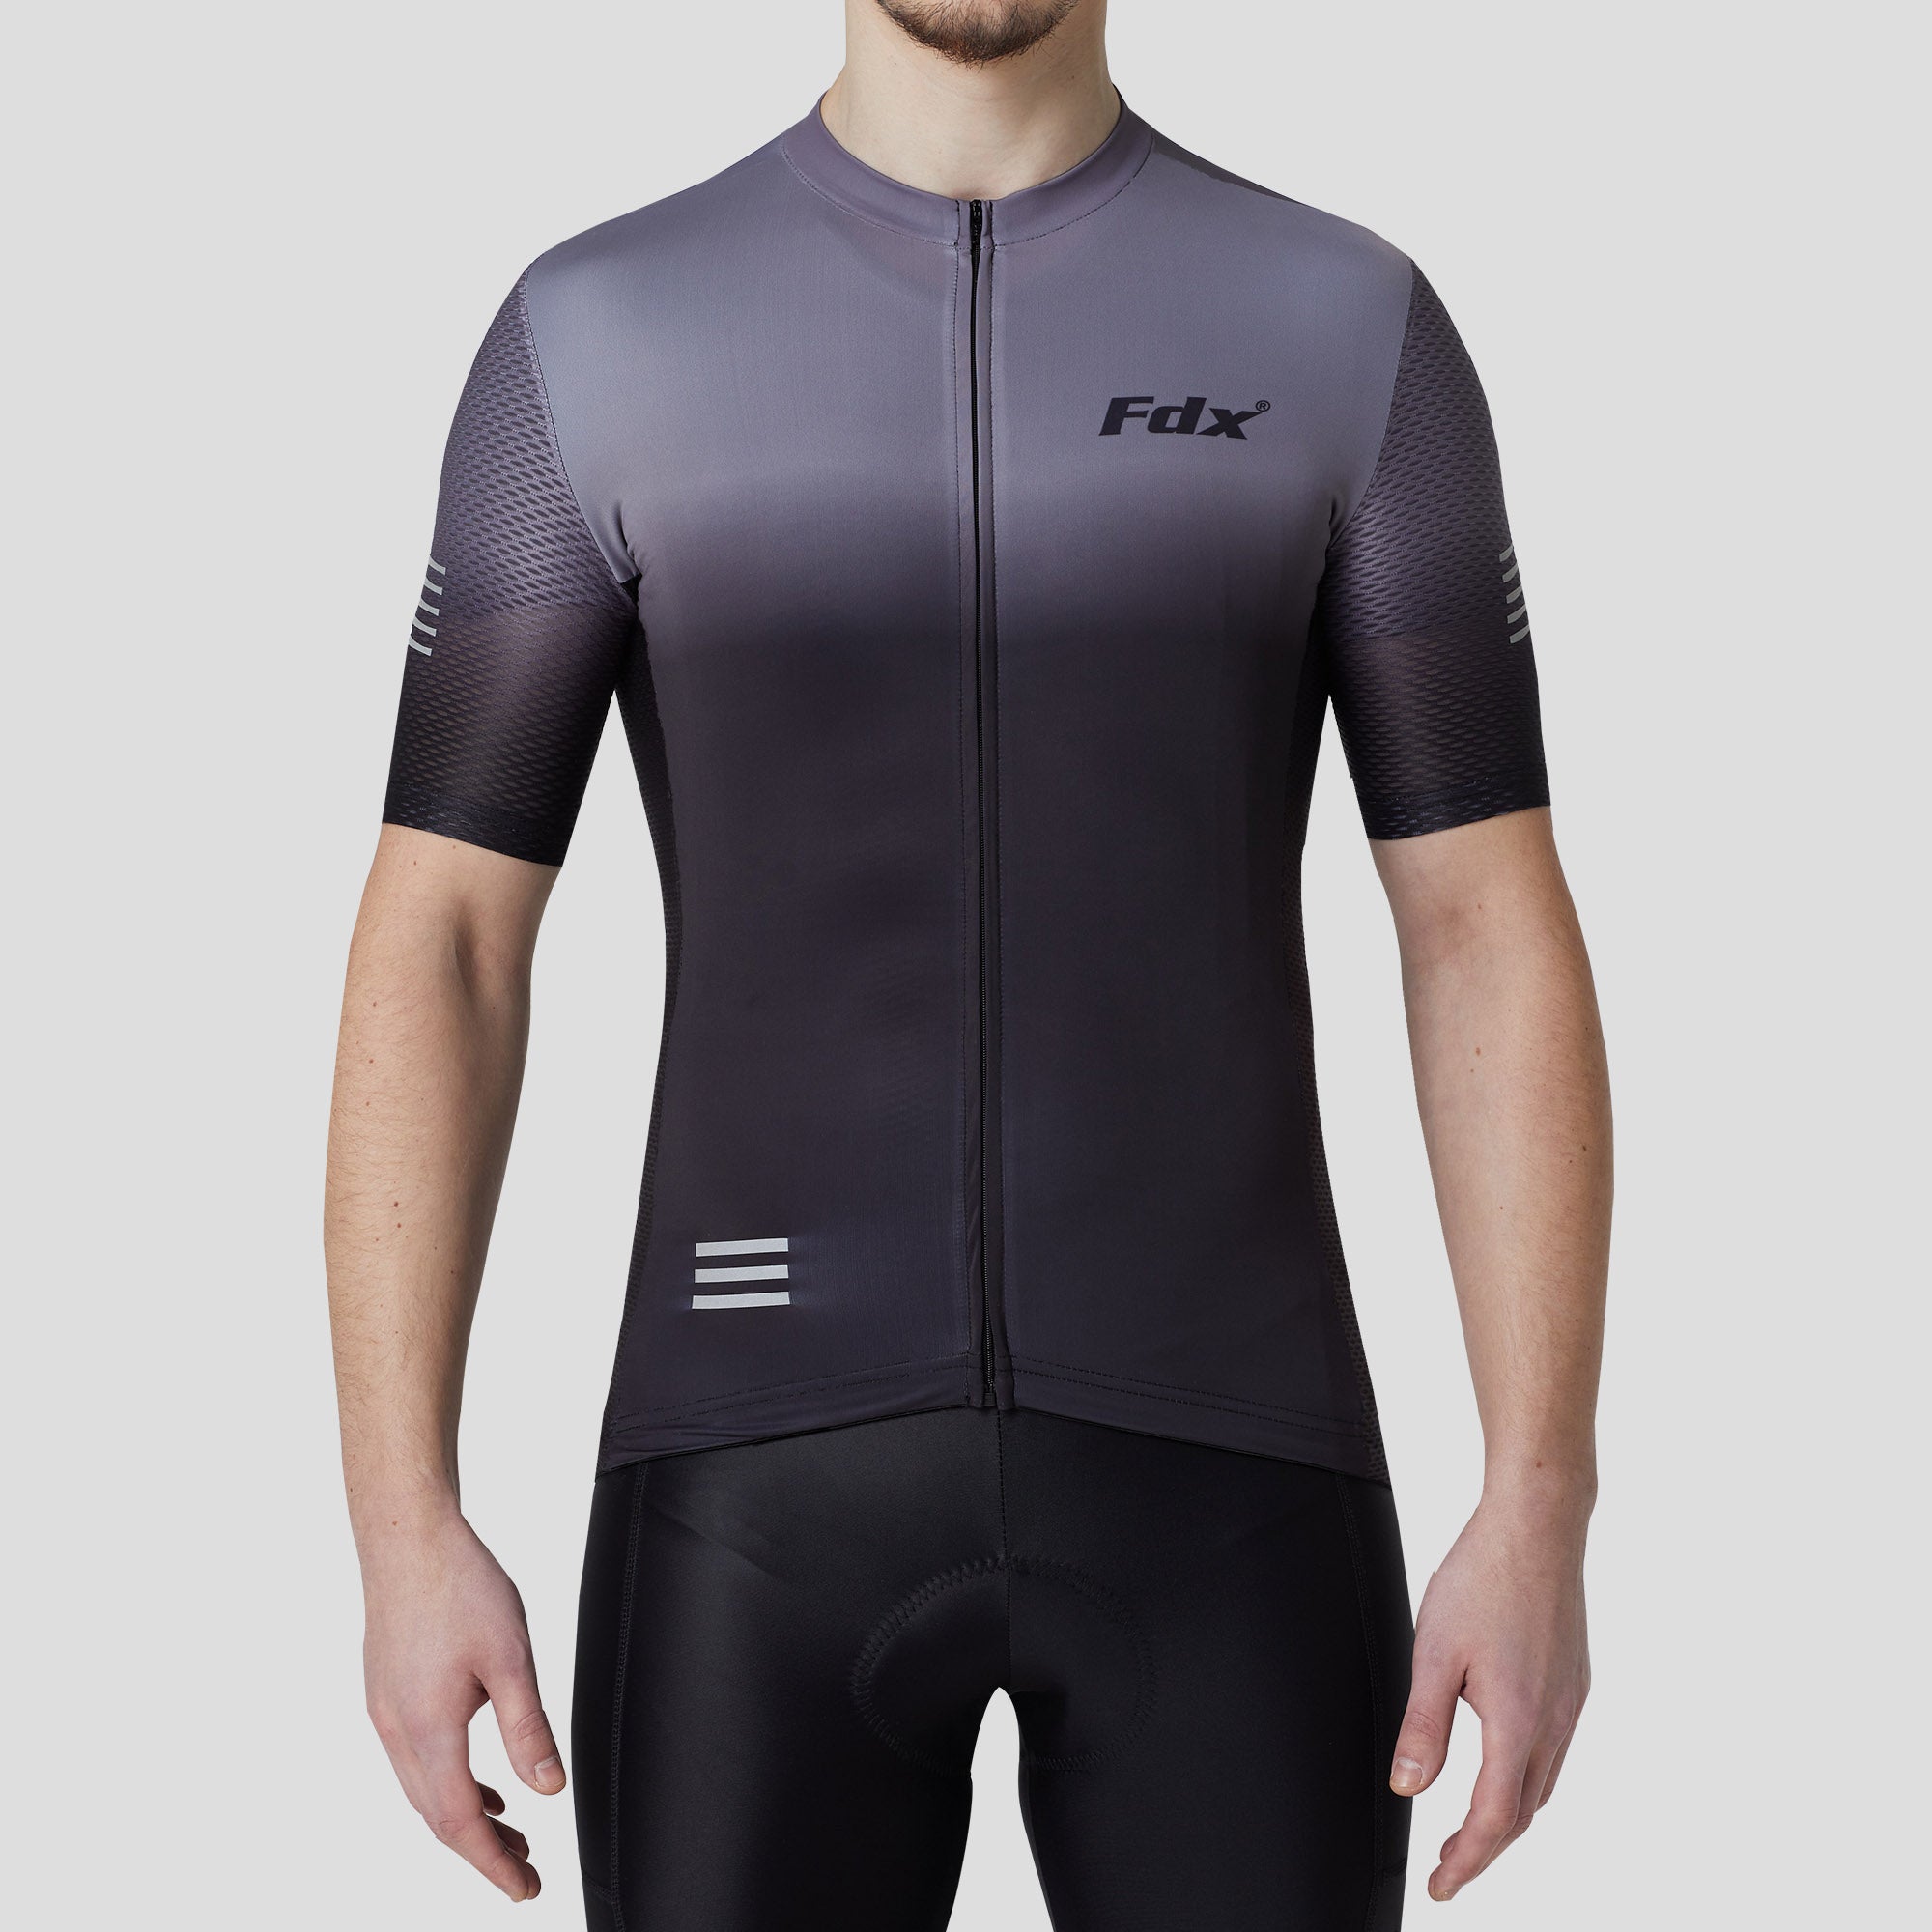 Fdx Mens Grey & Black Short Sleeve Cycling Jersey for Summer Best Road Bike Wear Top Light Weight, Full Zipper, Pockets & Hi-viz Reflectors - Duo